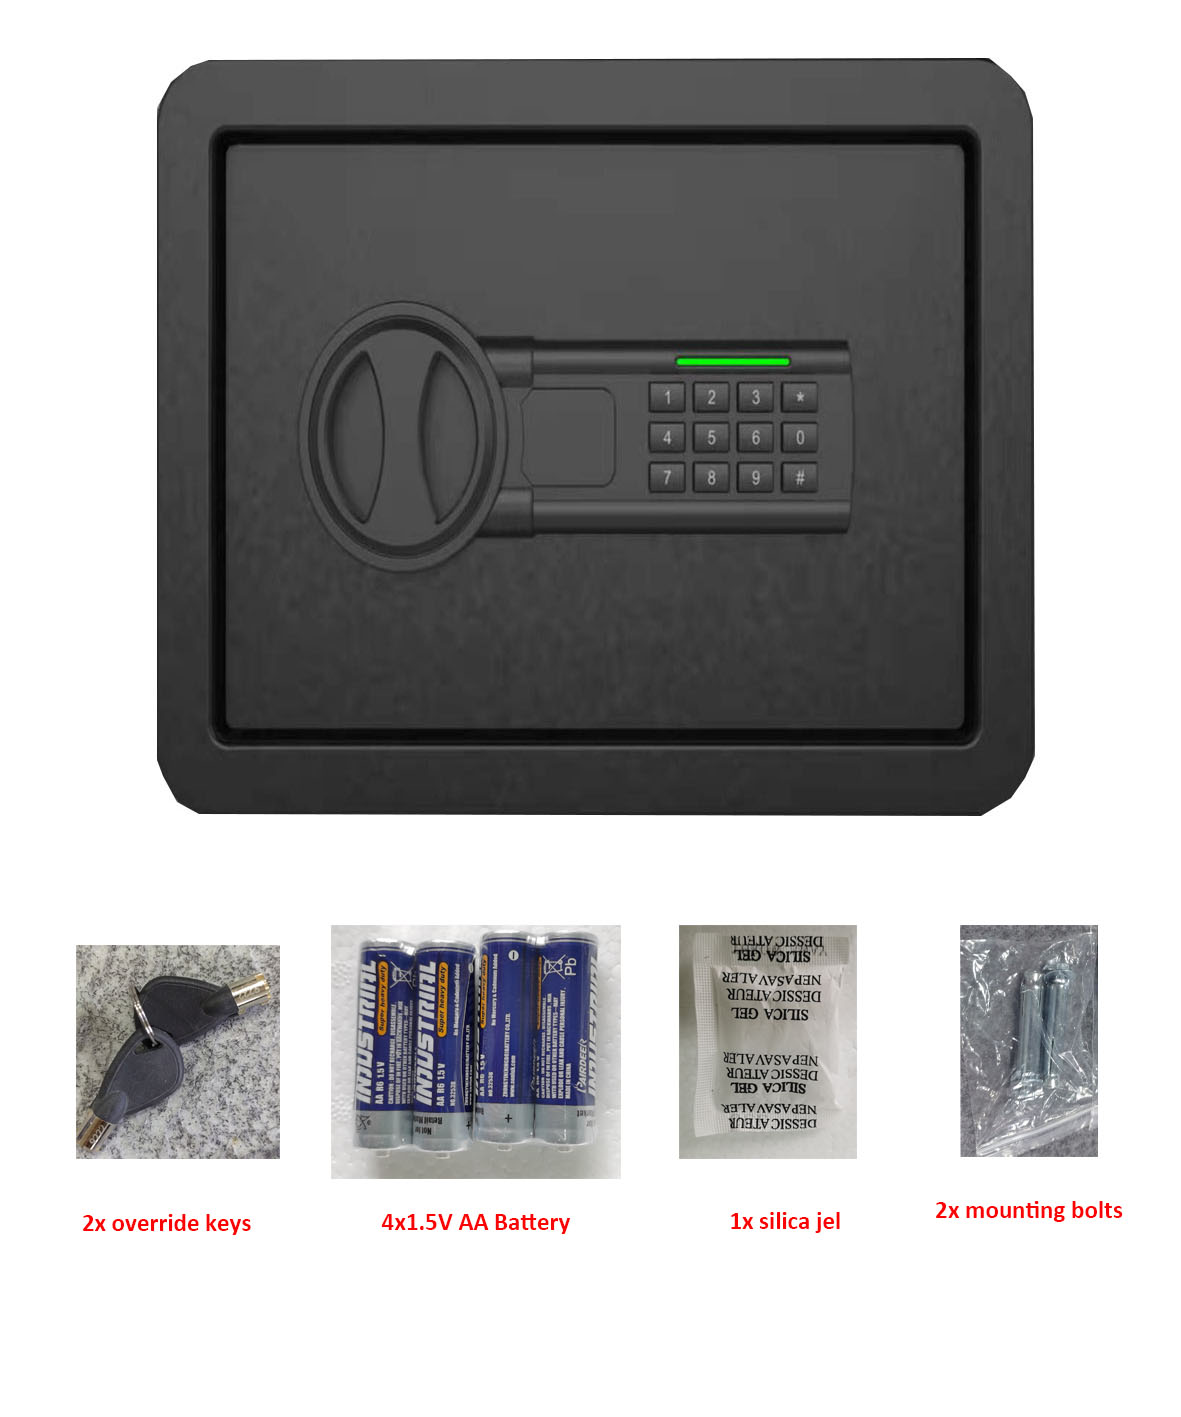 Mingyou 20SEK Electronic Home Steel Safety Locker Safe Box Bunduki Inalinda Ngome ya Tresore Coffre(9)